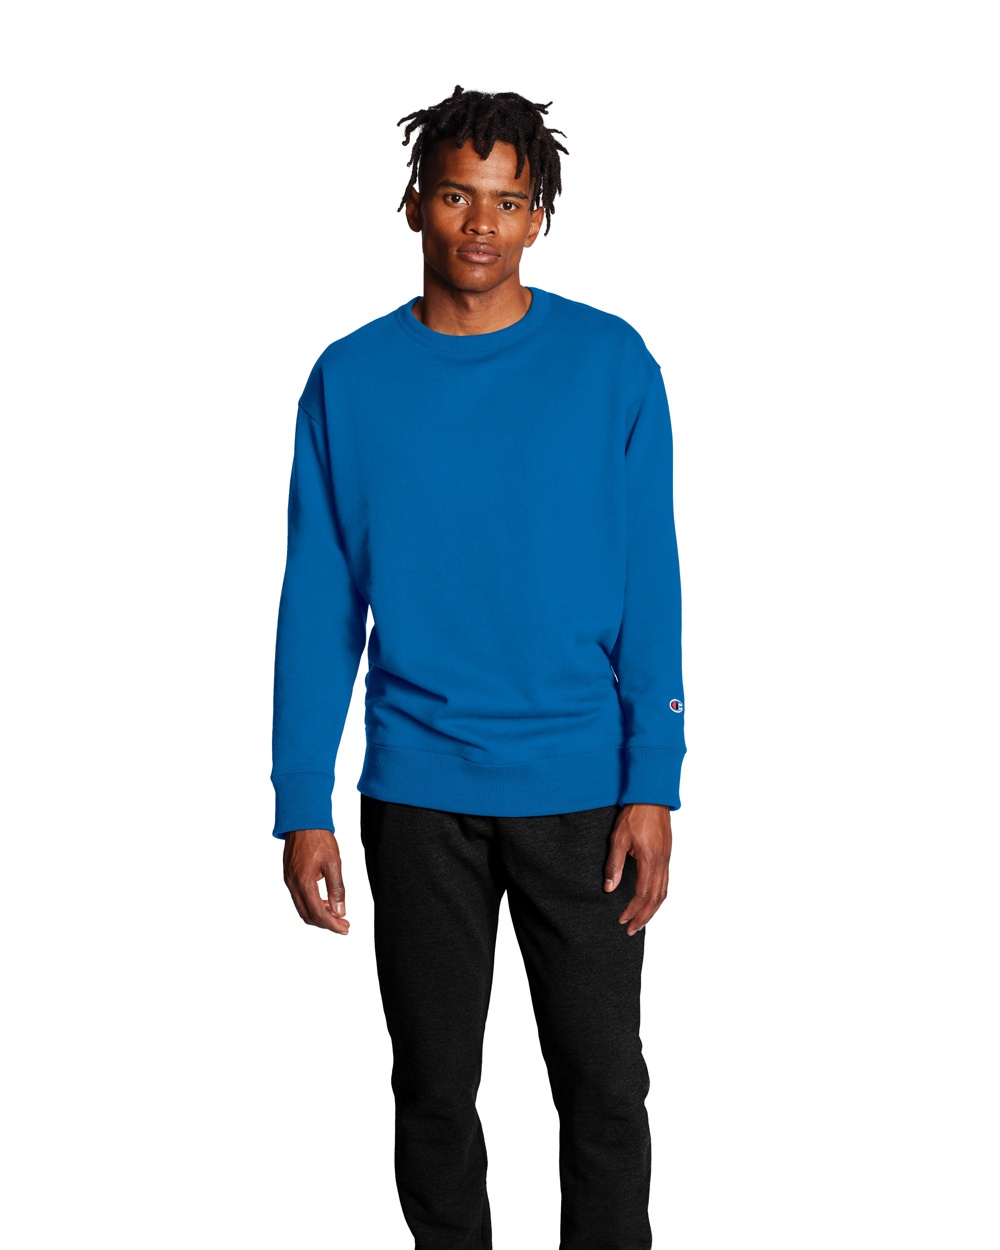 Crewneck and Apparel Supplies Powerblend® Champion® S600 - Wholesale Sweatshirt